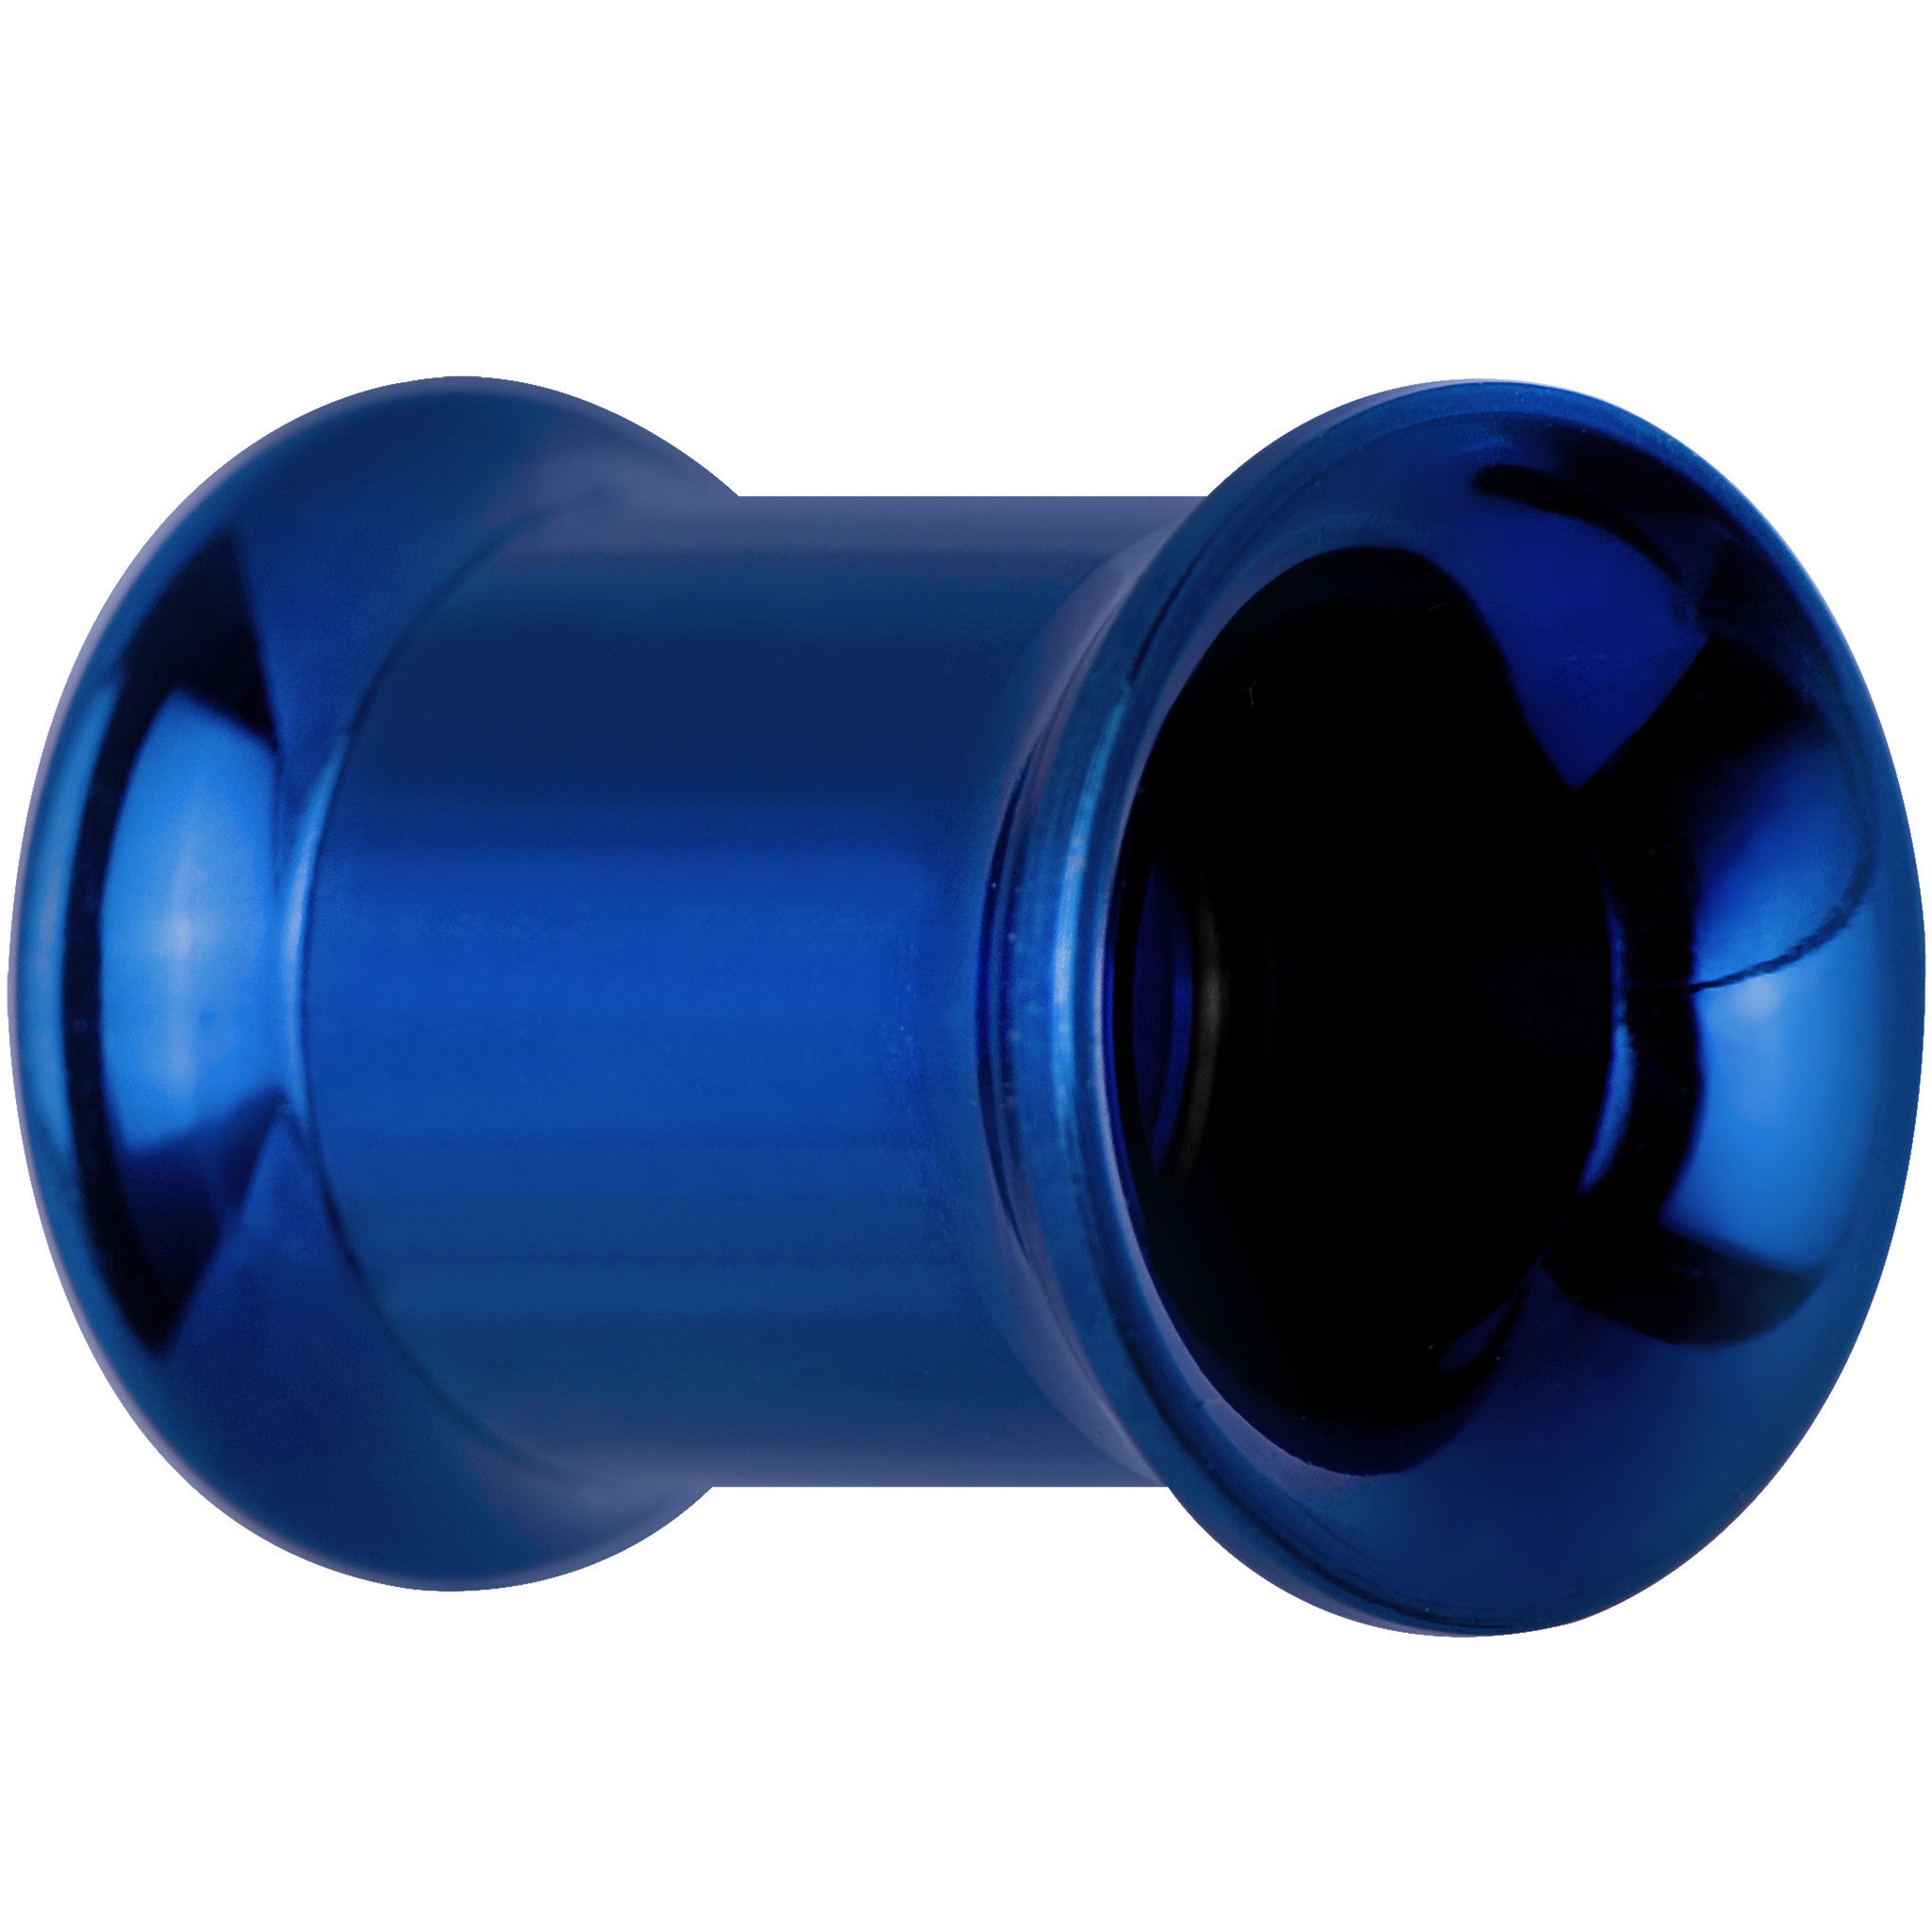 00 Gauge Royal Blue Anodized Titanium Steel Internally Threaded Screw Fit Plug Set